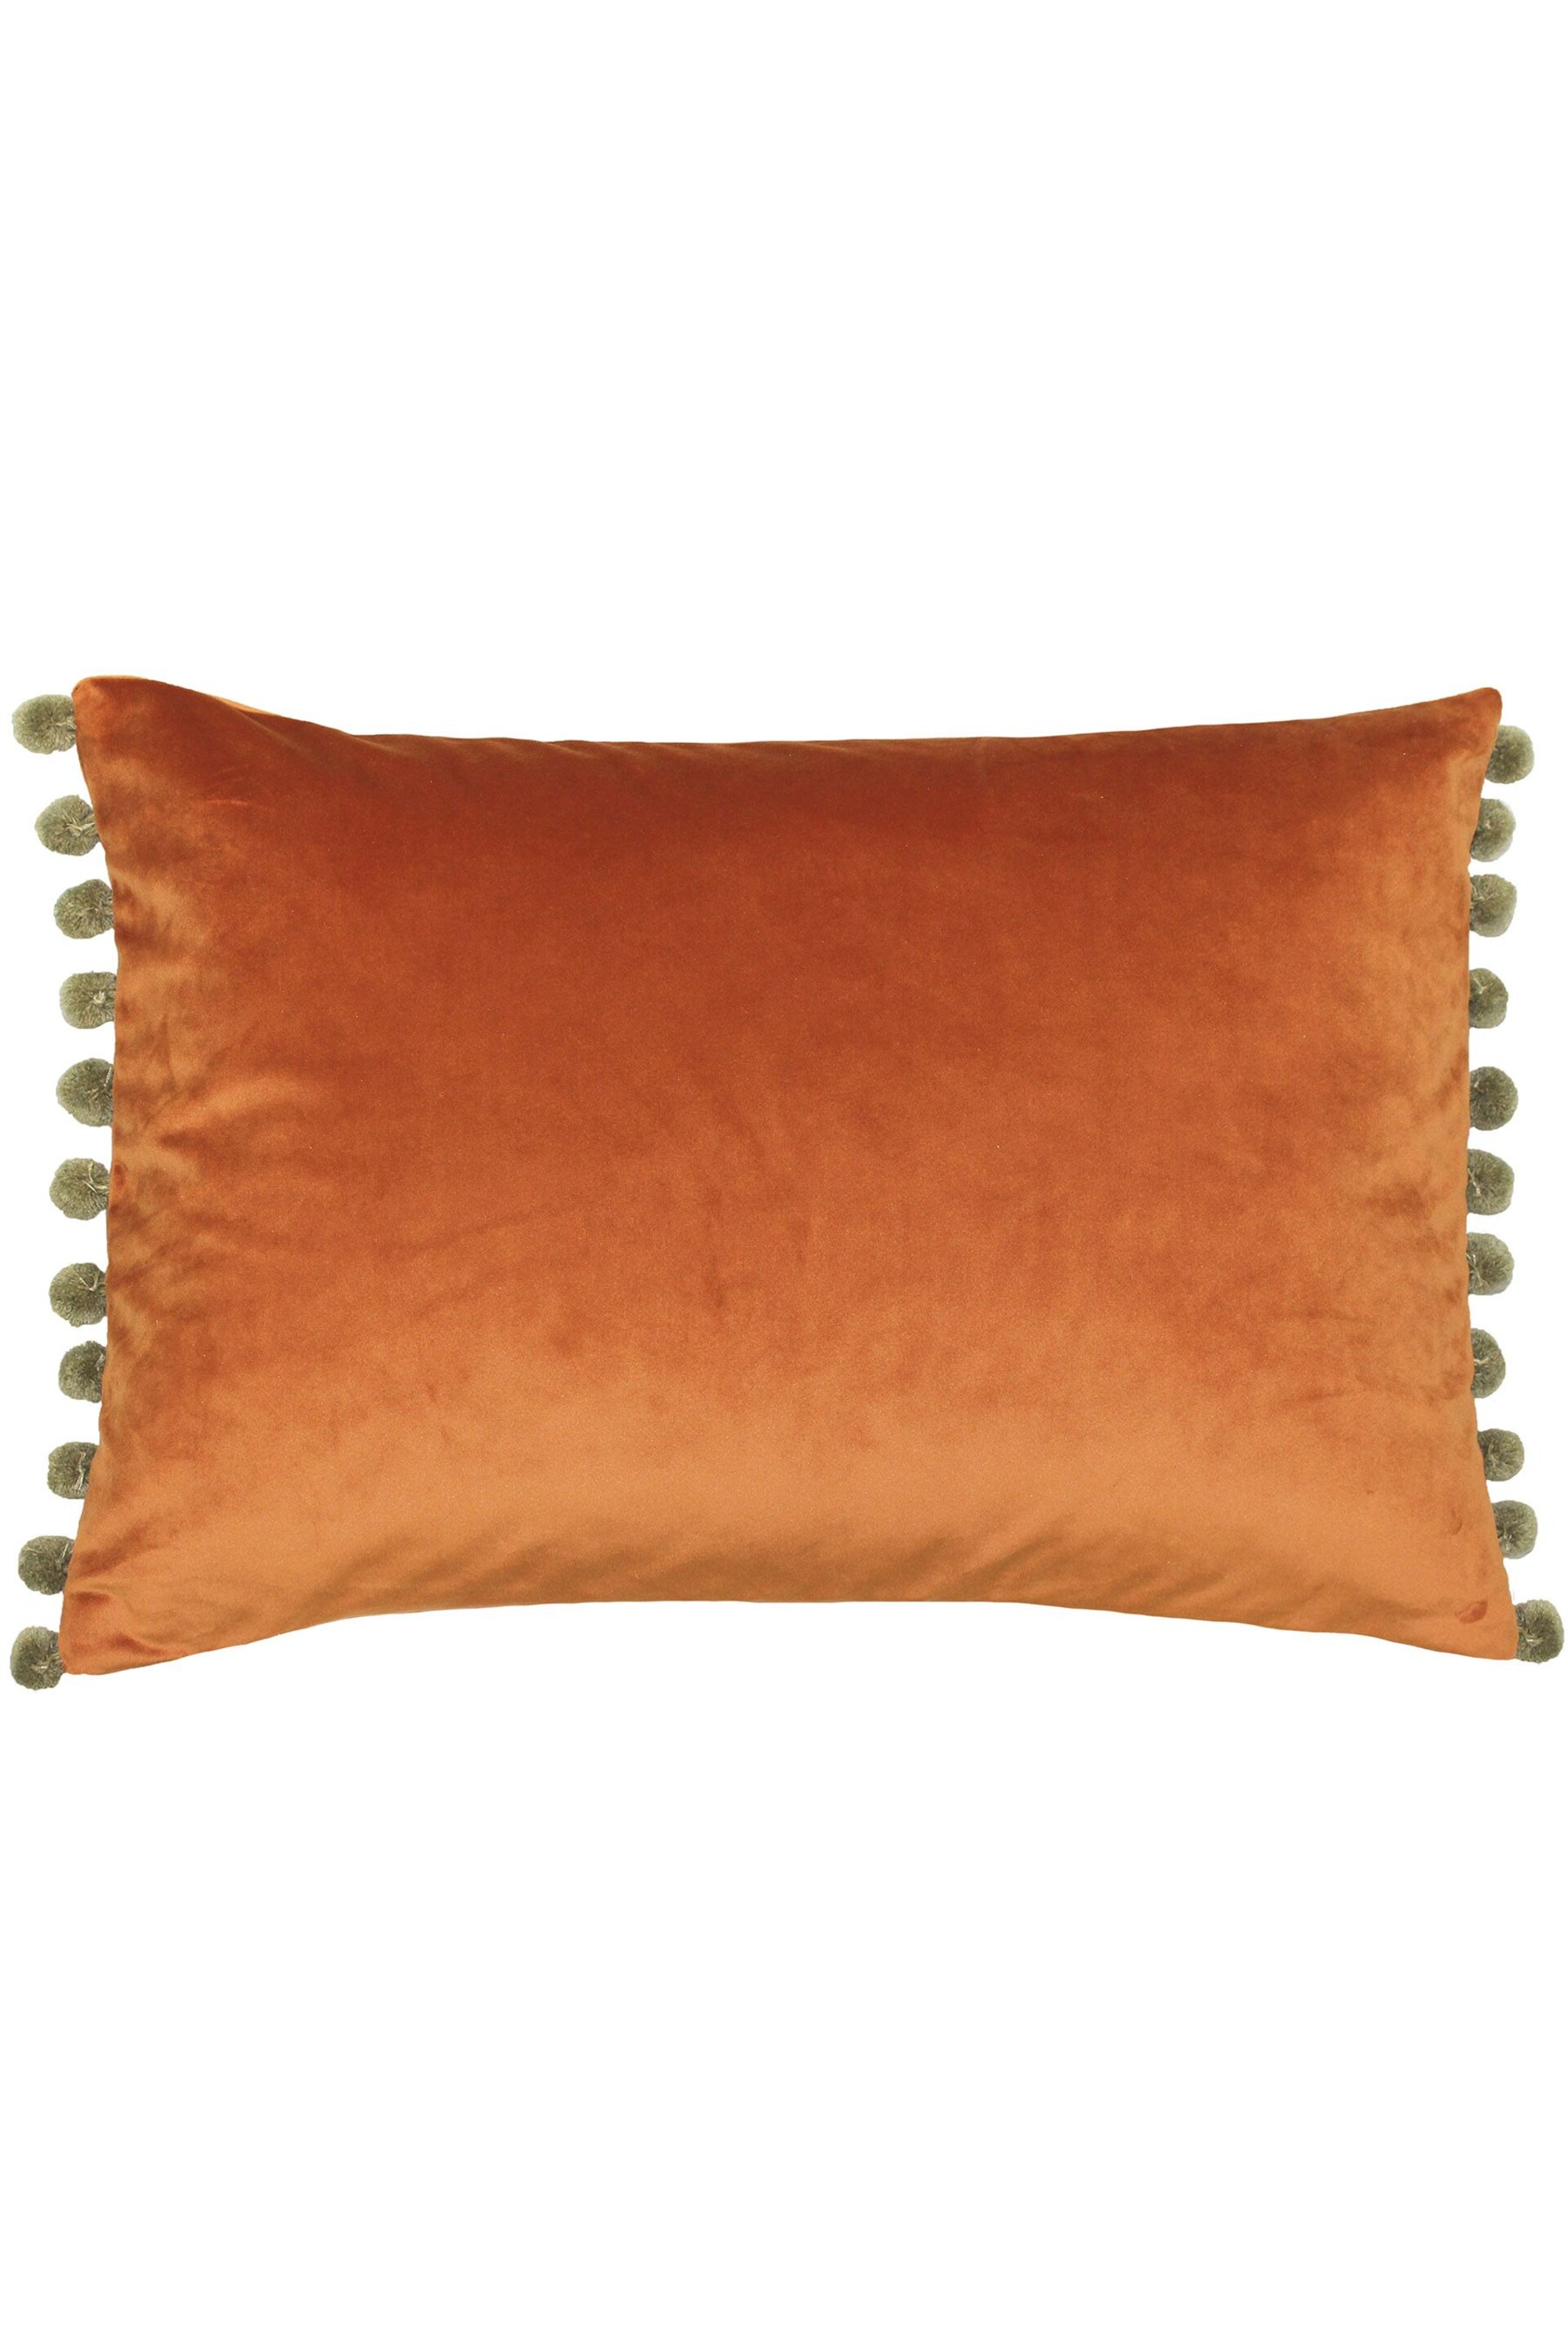 Riva Paoletti Rust Orange/Khaki Green Fiesta Velvet Polyester Filled Cushion - Image 1 of 1